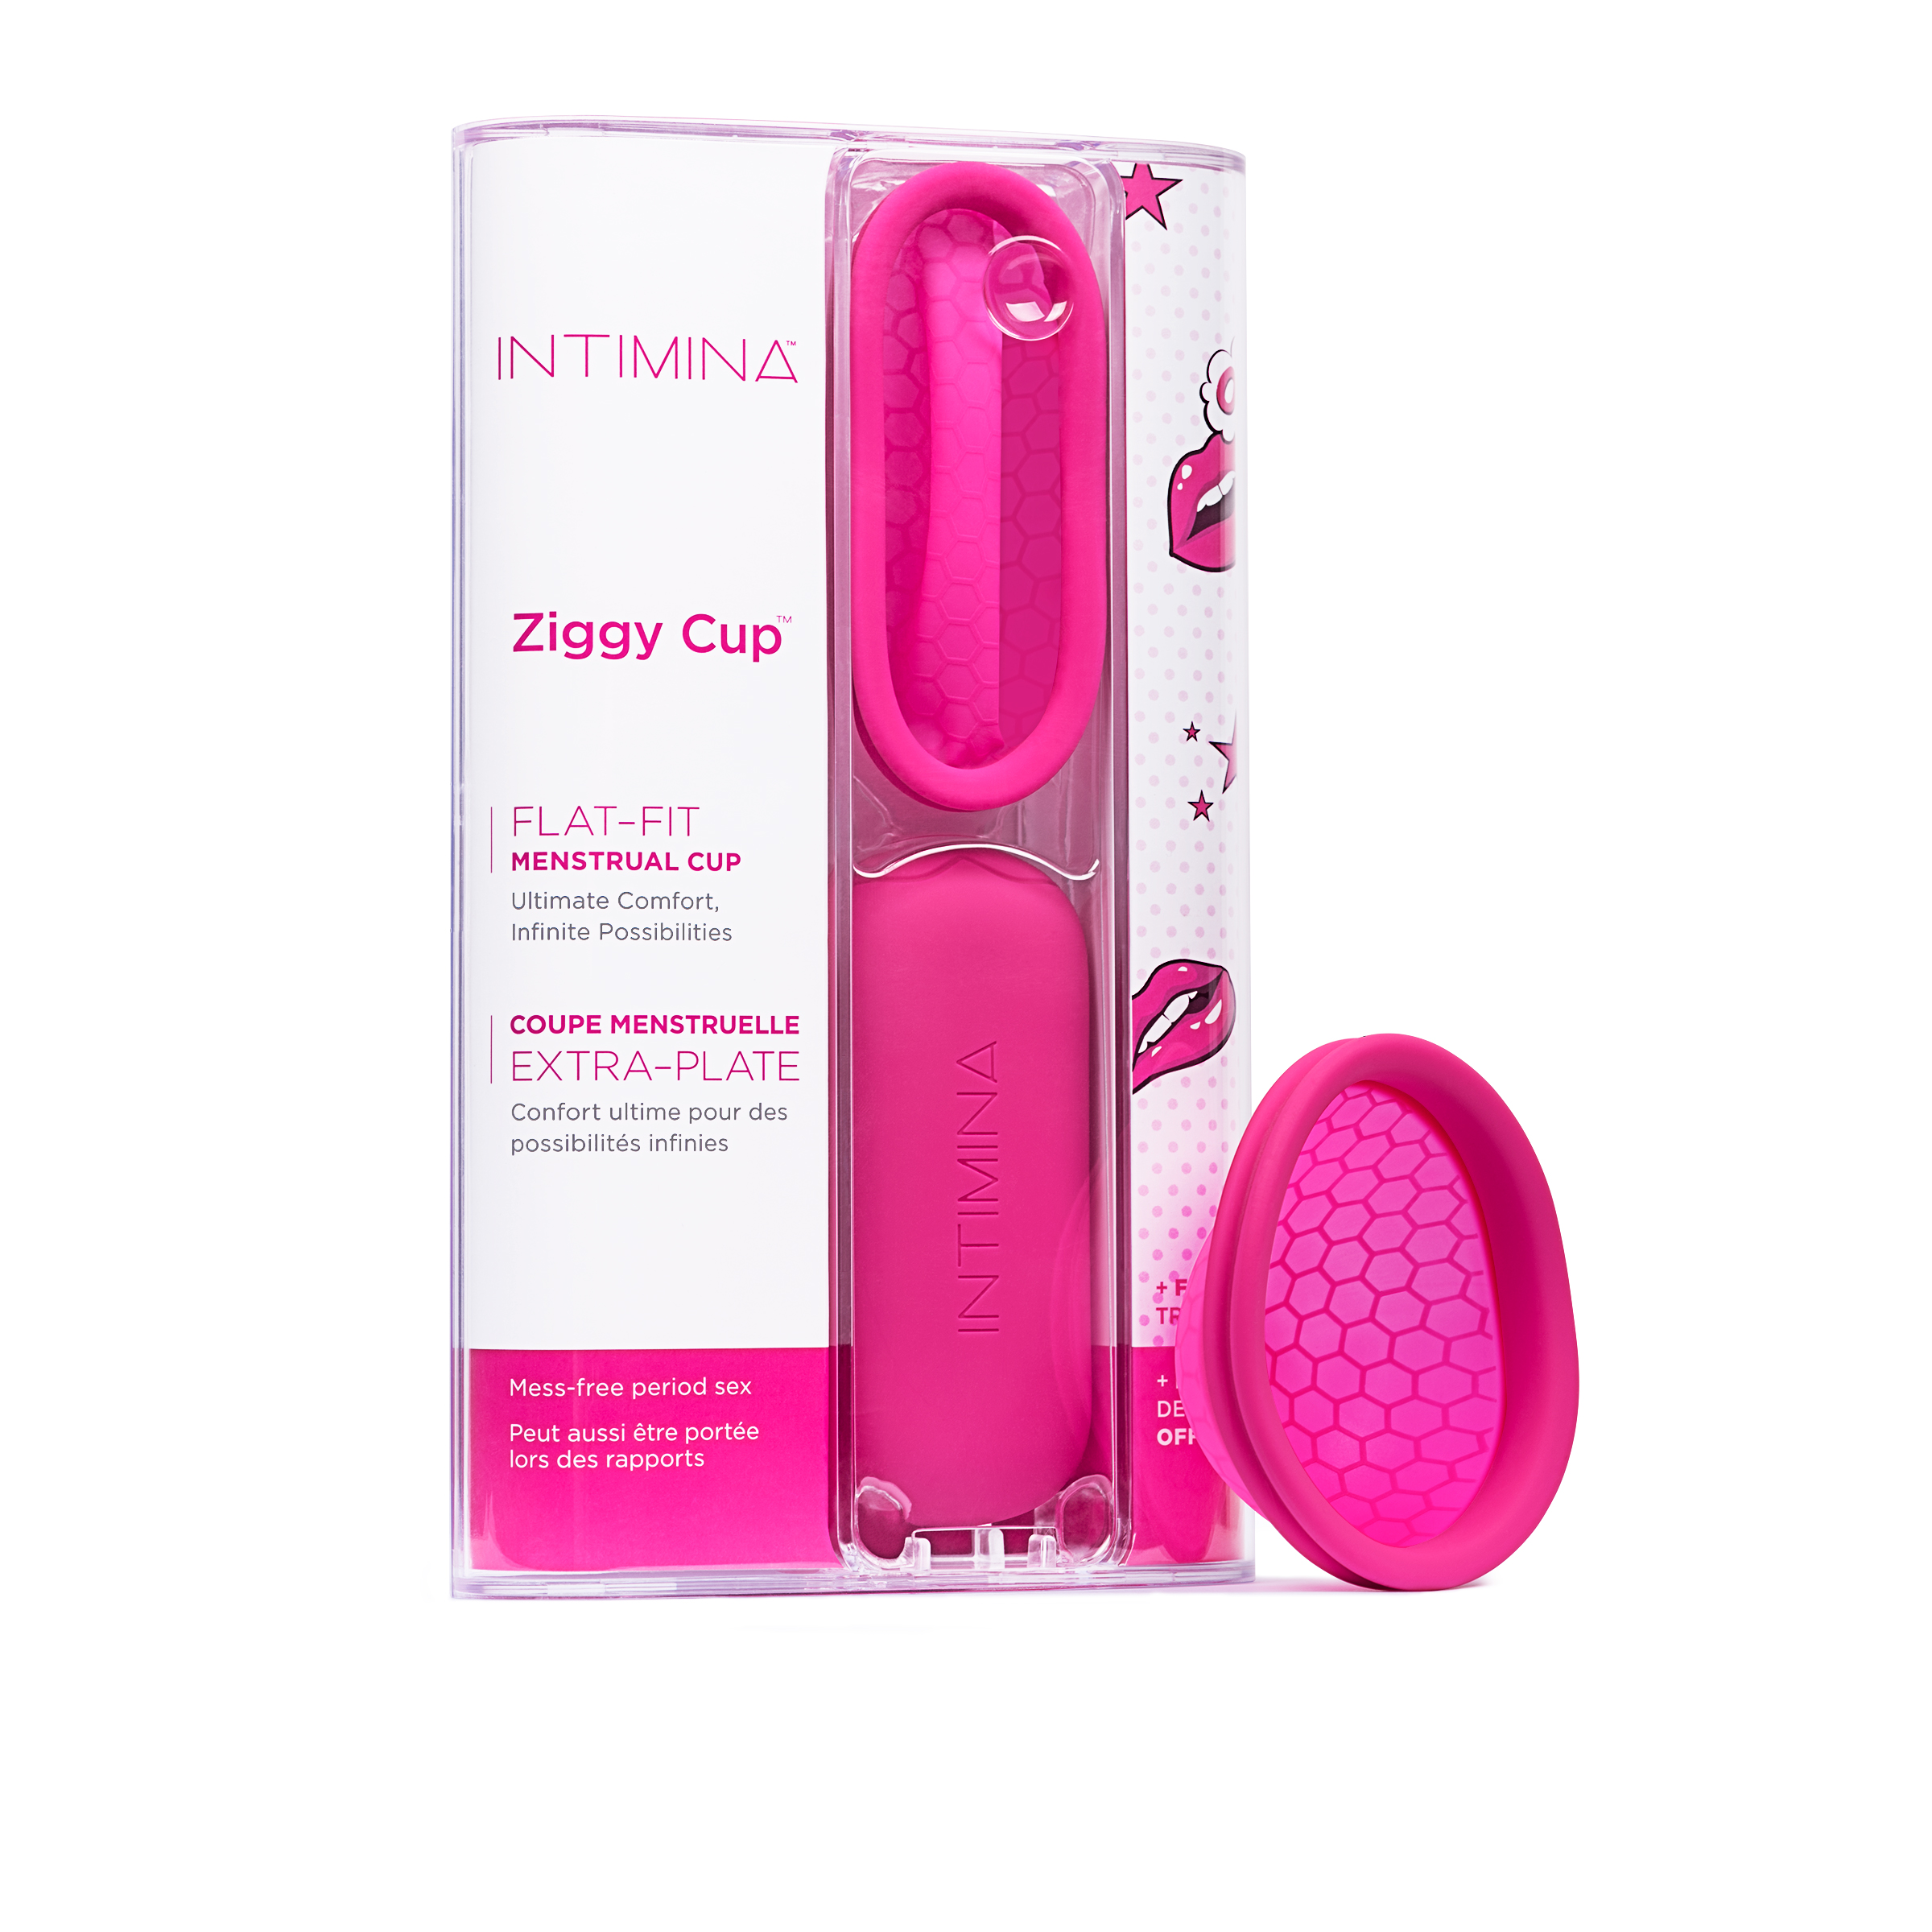 Intimina Ziggy Cup Flat-fit Reusable Menstrual Cup - image 1 of 2